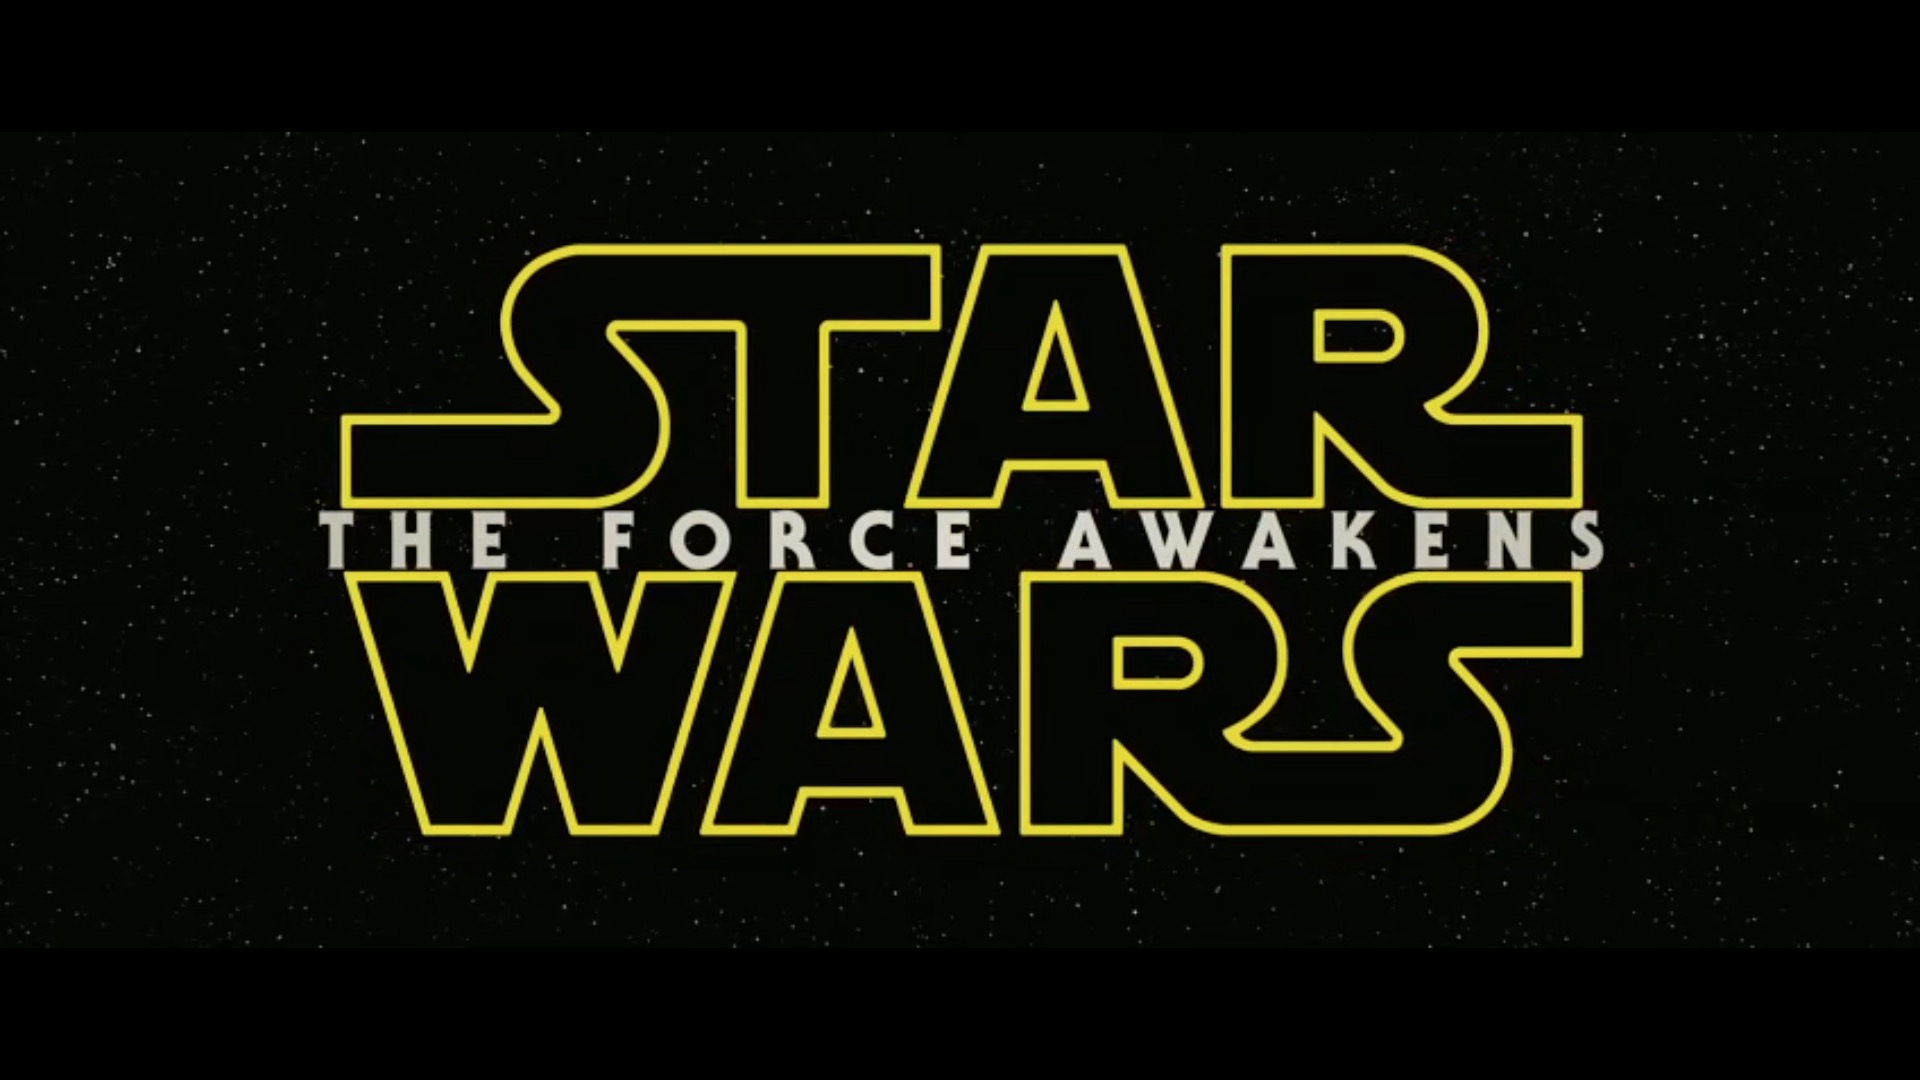 Star Wars VII_The Force Awaken Official Trailer_5